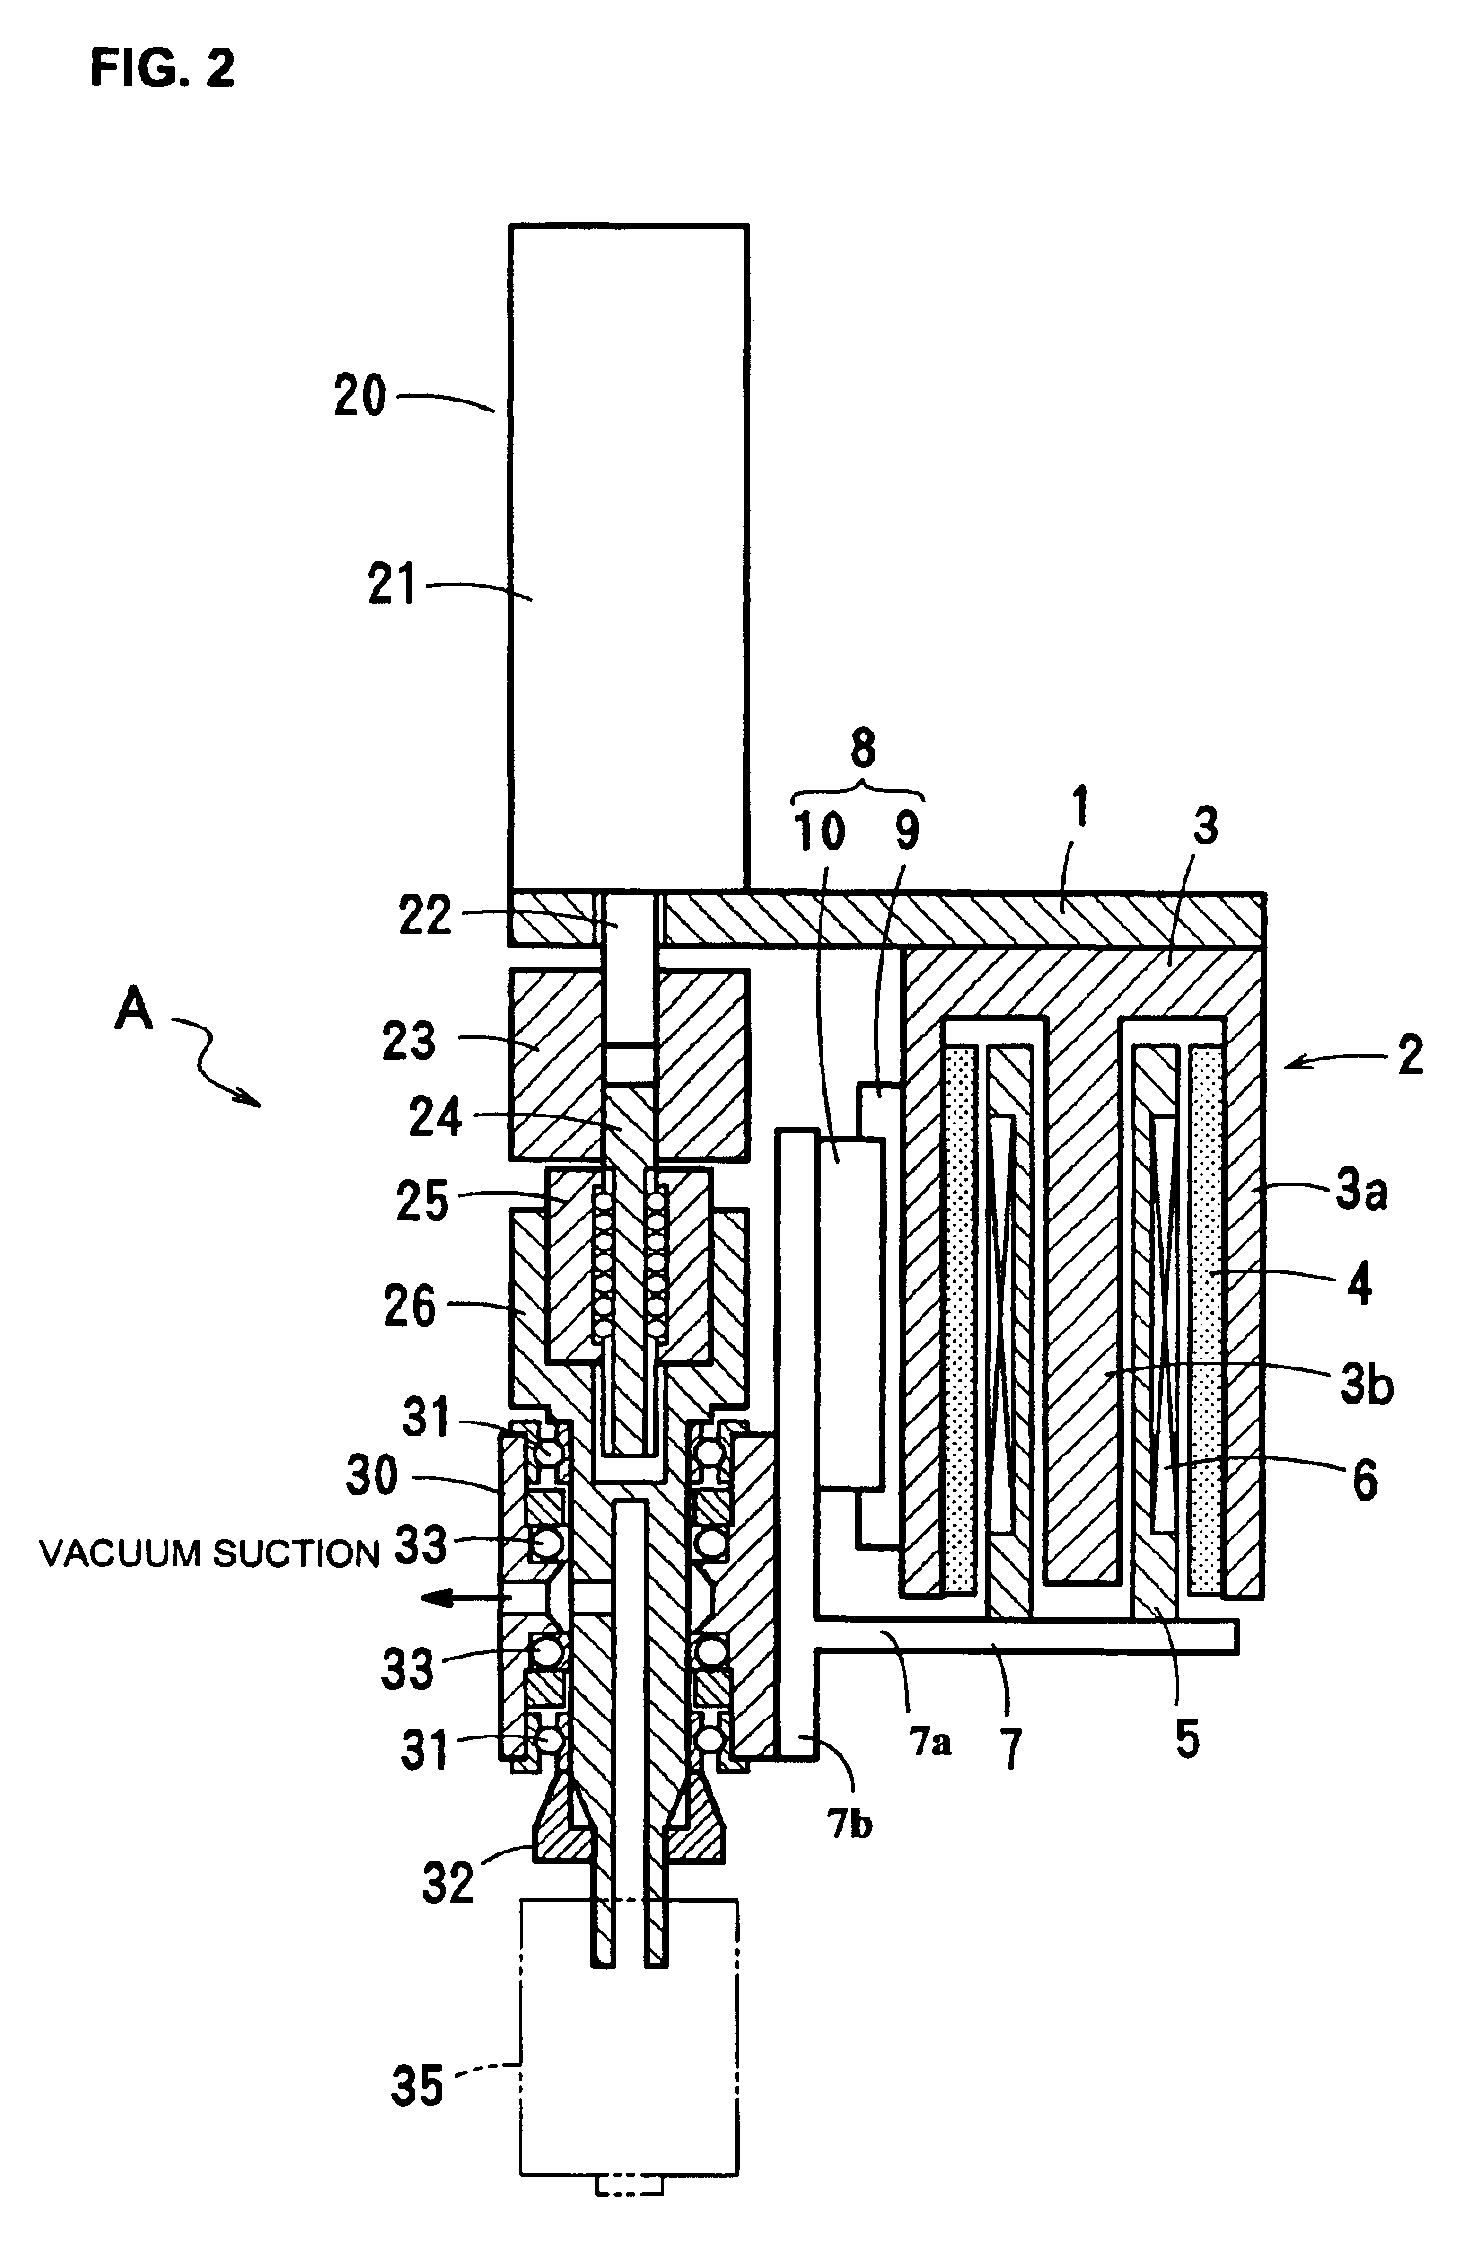 Component-placing apparatus